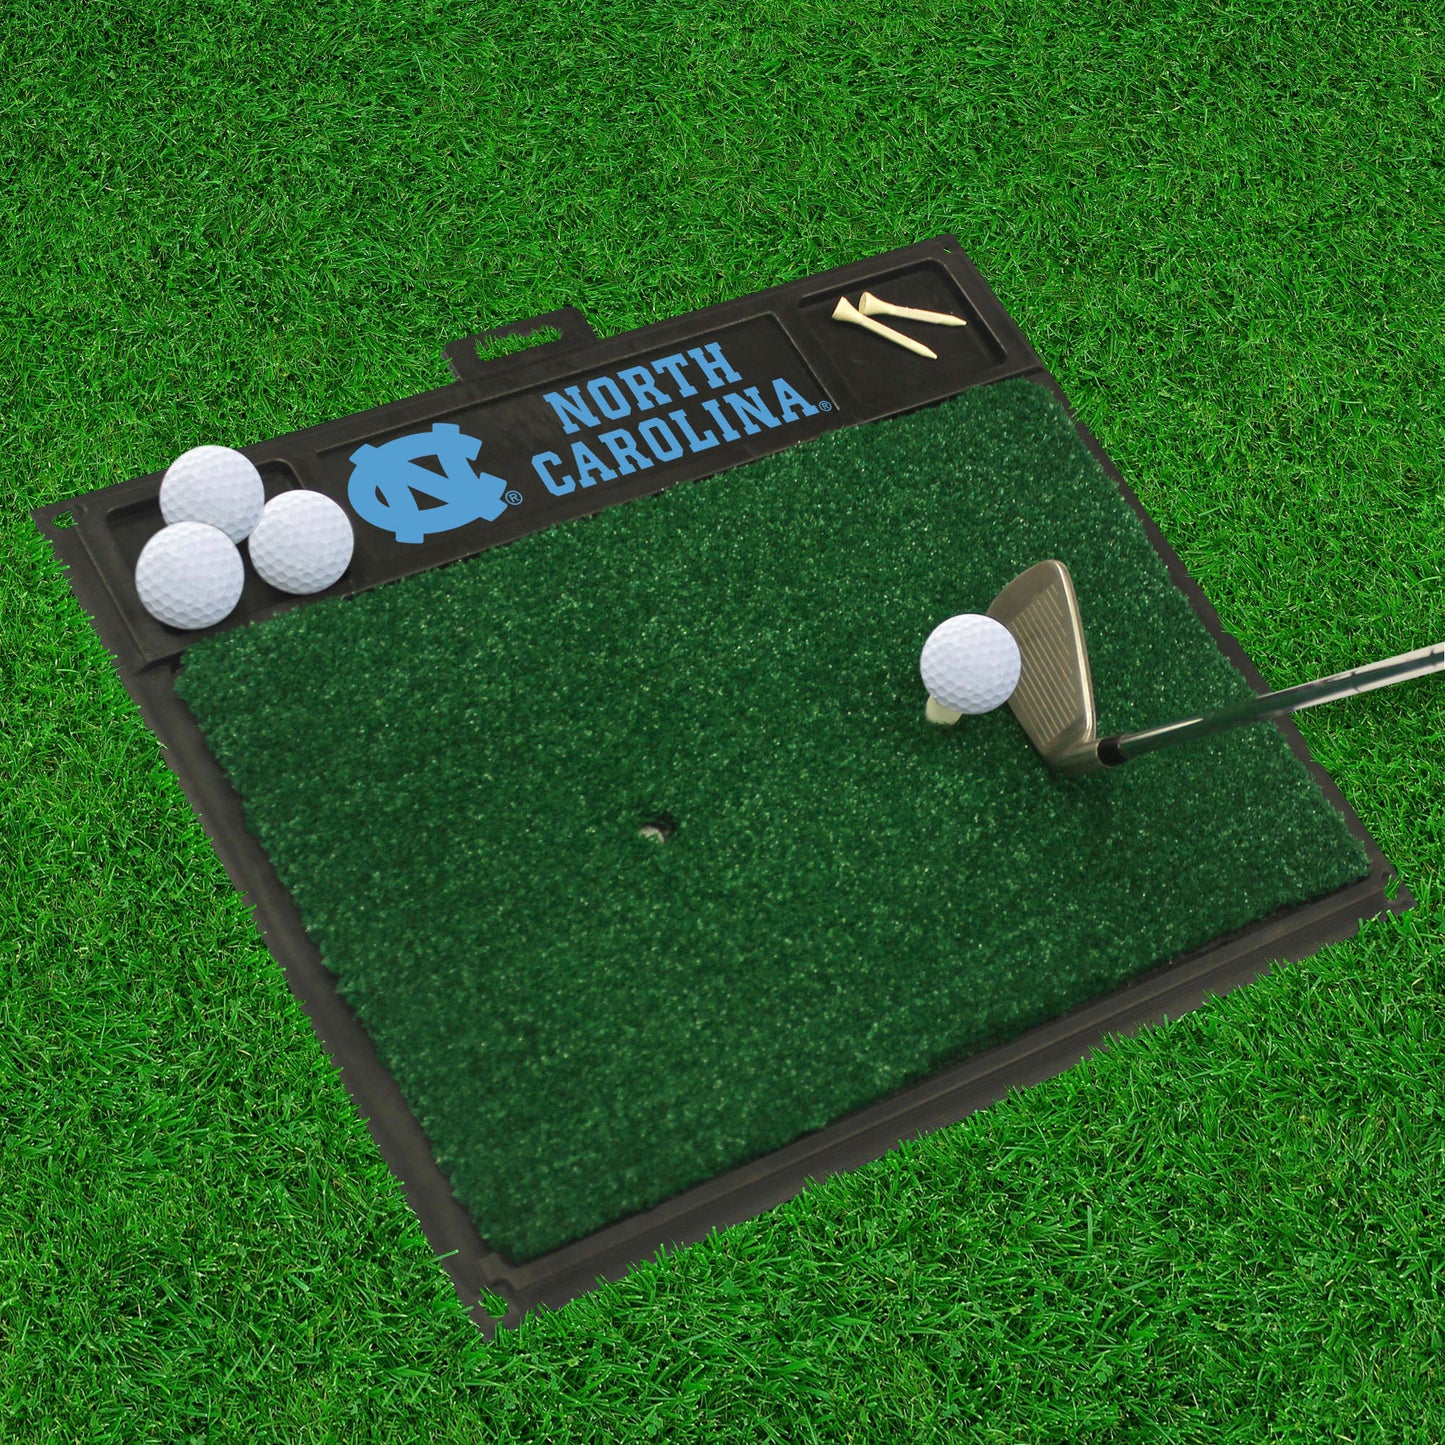 North Carolina Tar Heels Golf Hitting Mat with NC Logo & North Carolina Wordmark by Fanmats